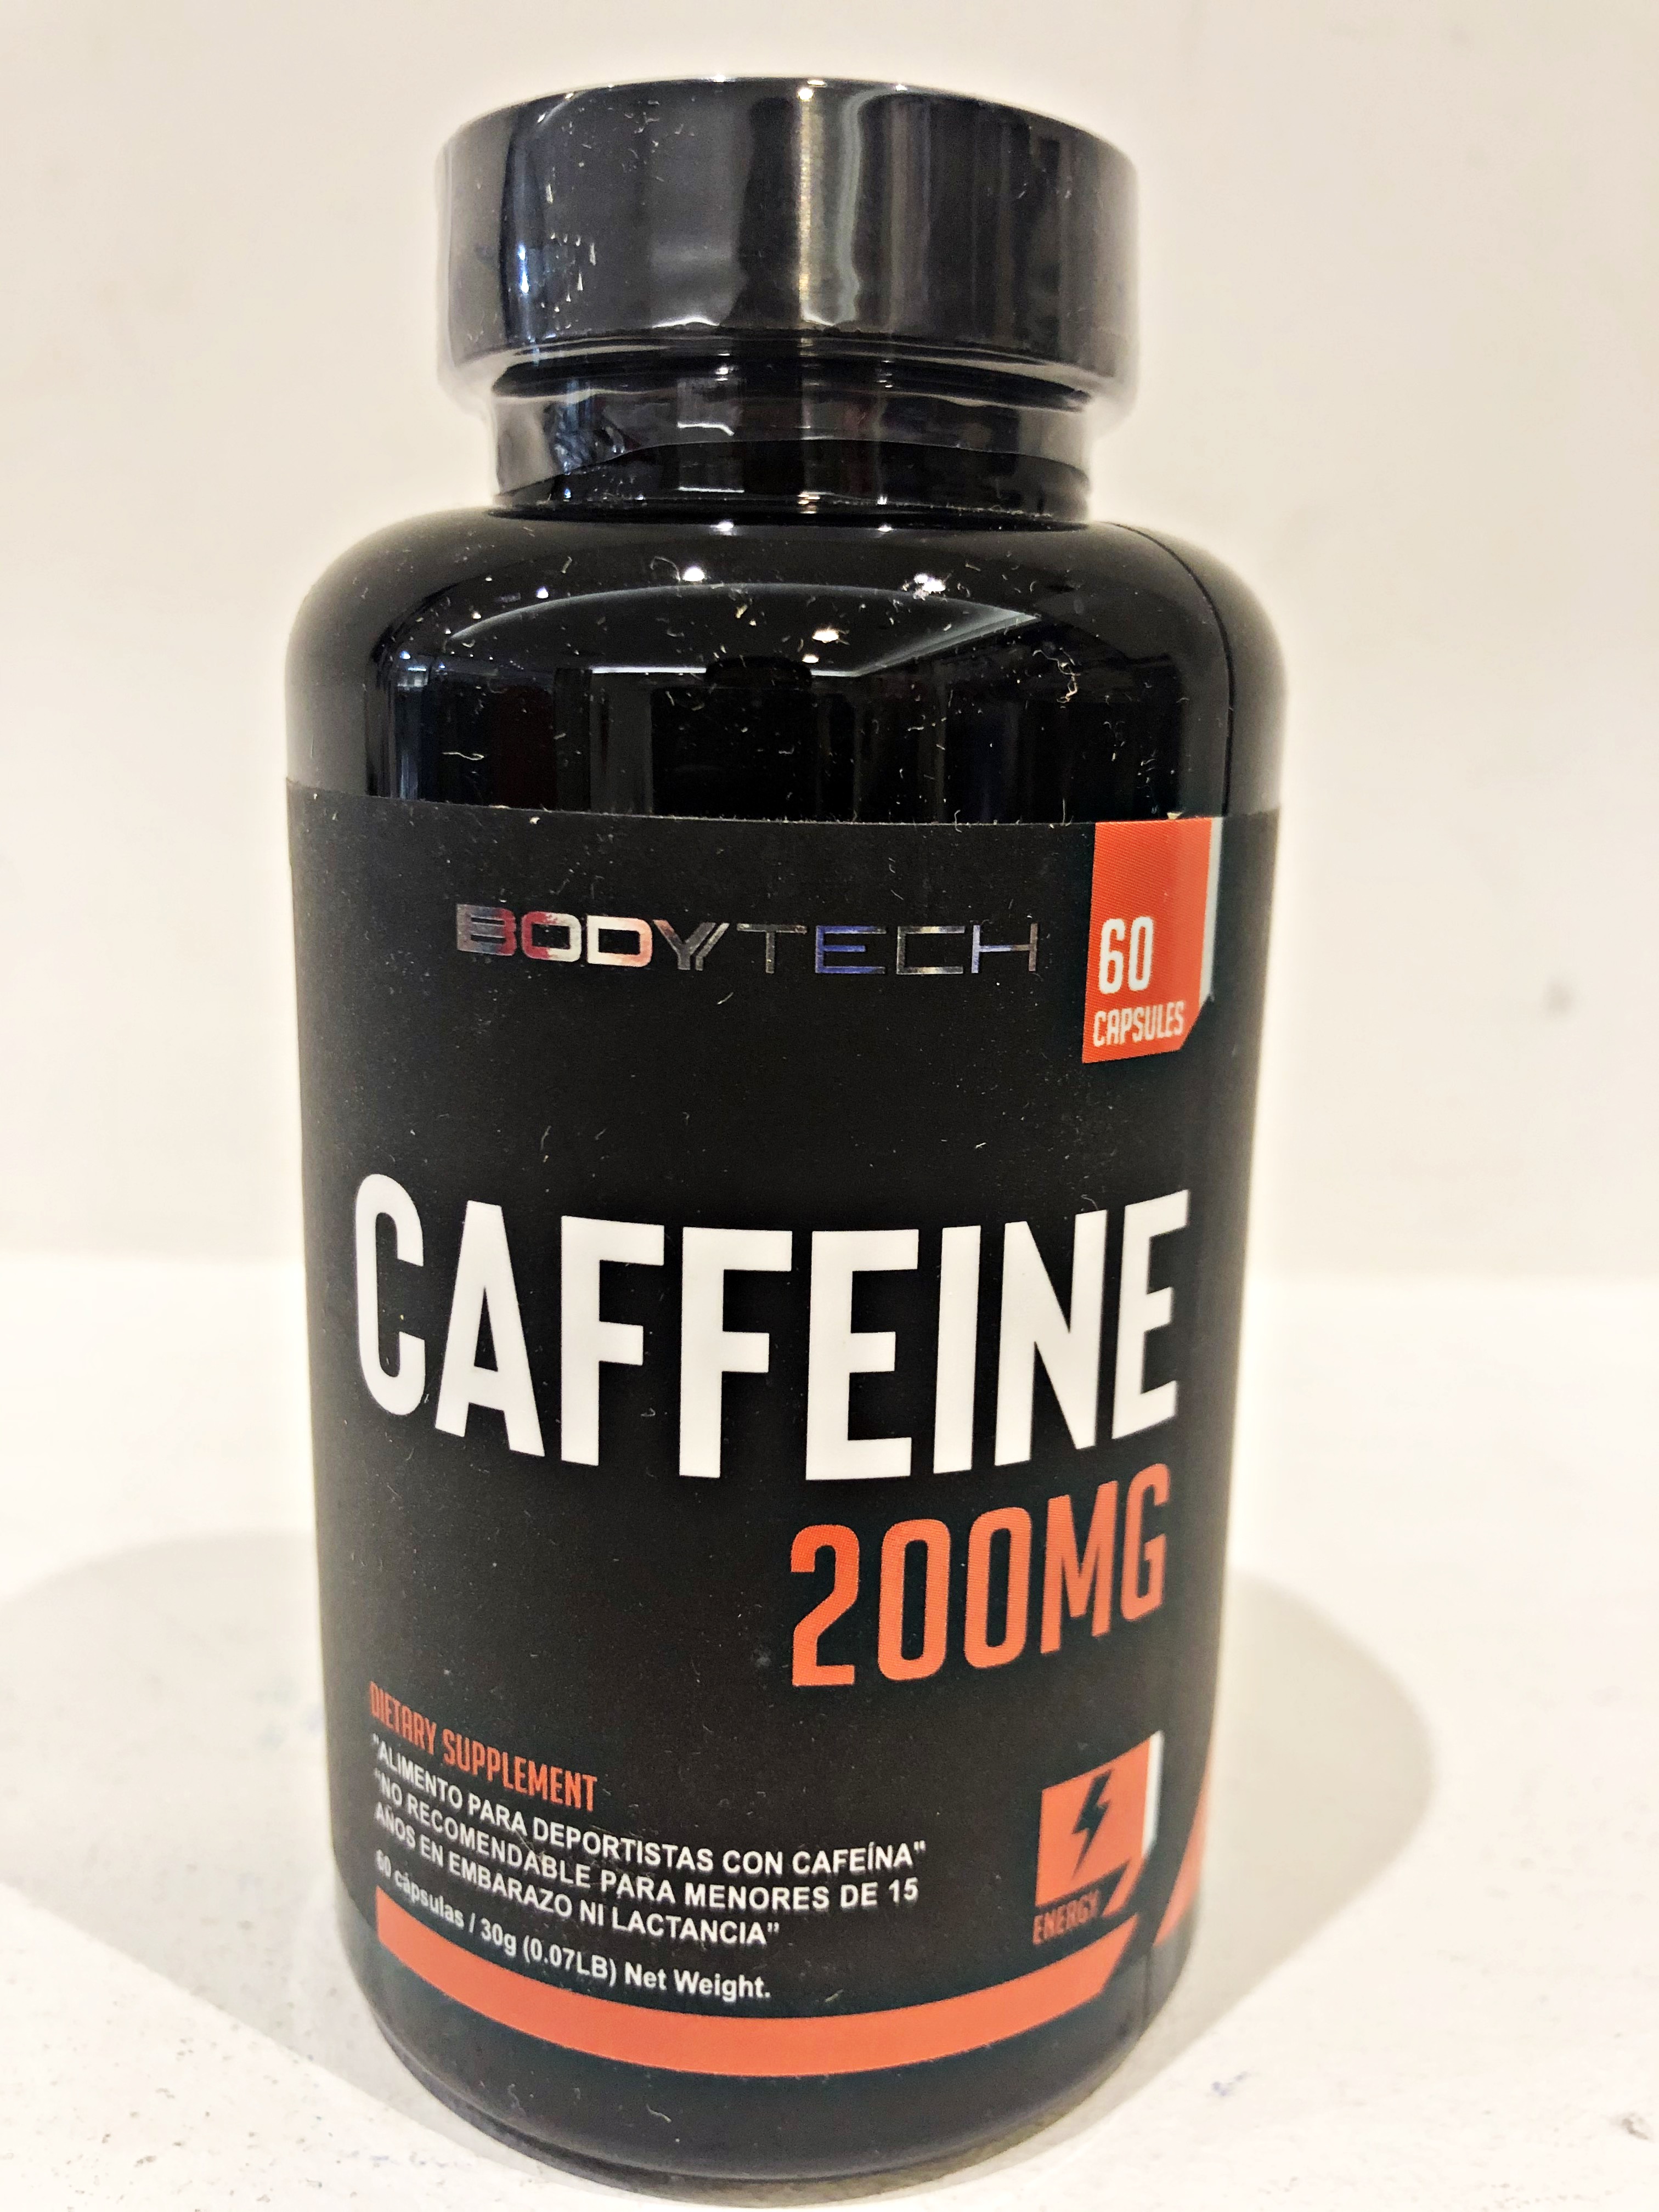 Caffeine 200mg Bodytech